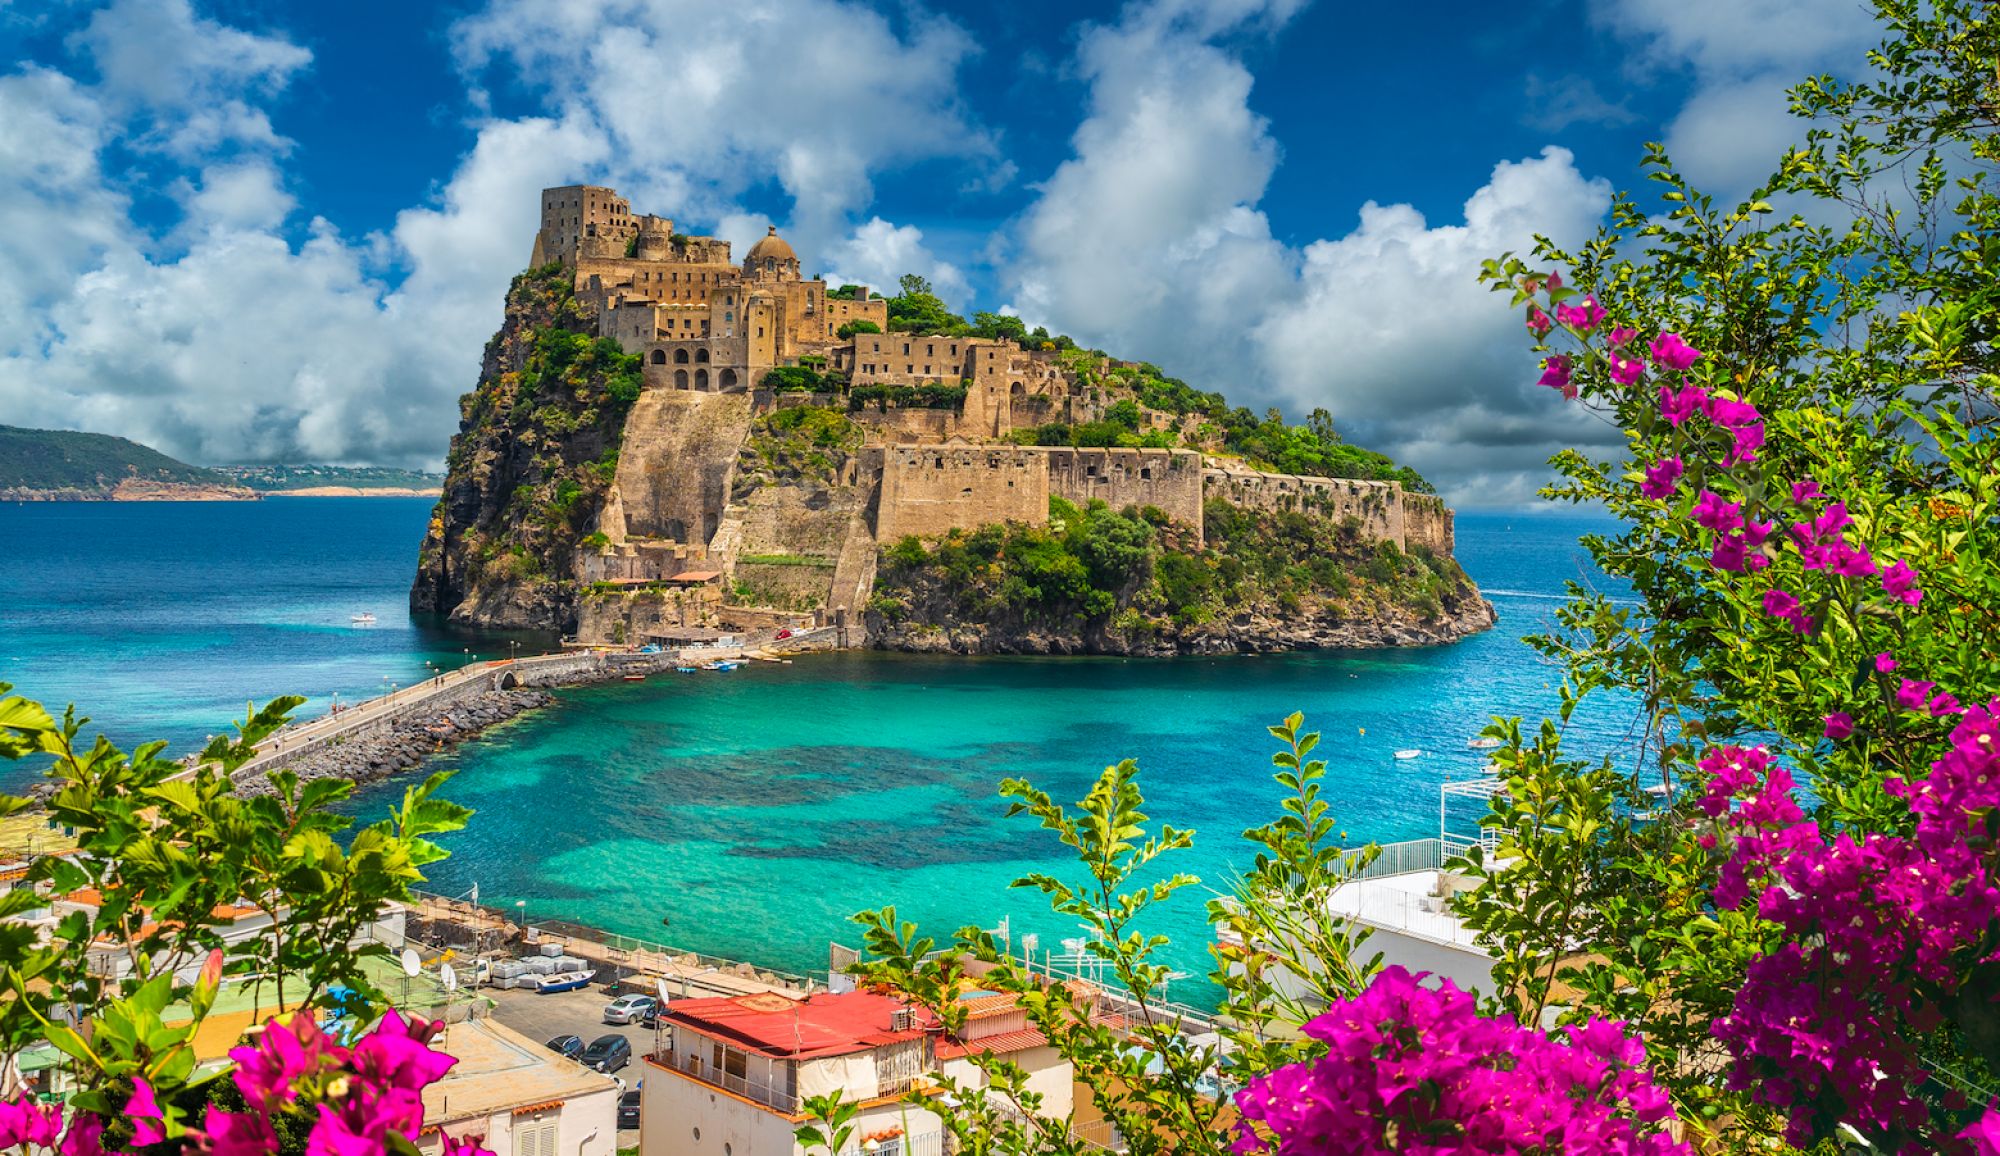 Viaggio nelle isole Flegree: Ischia - Italia.it